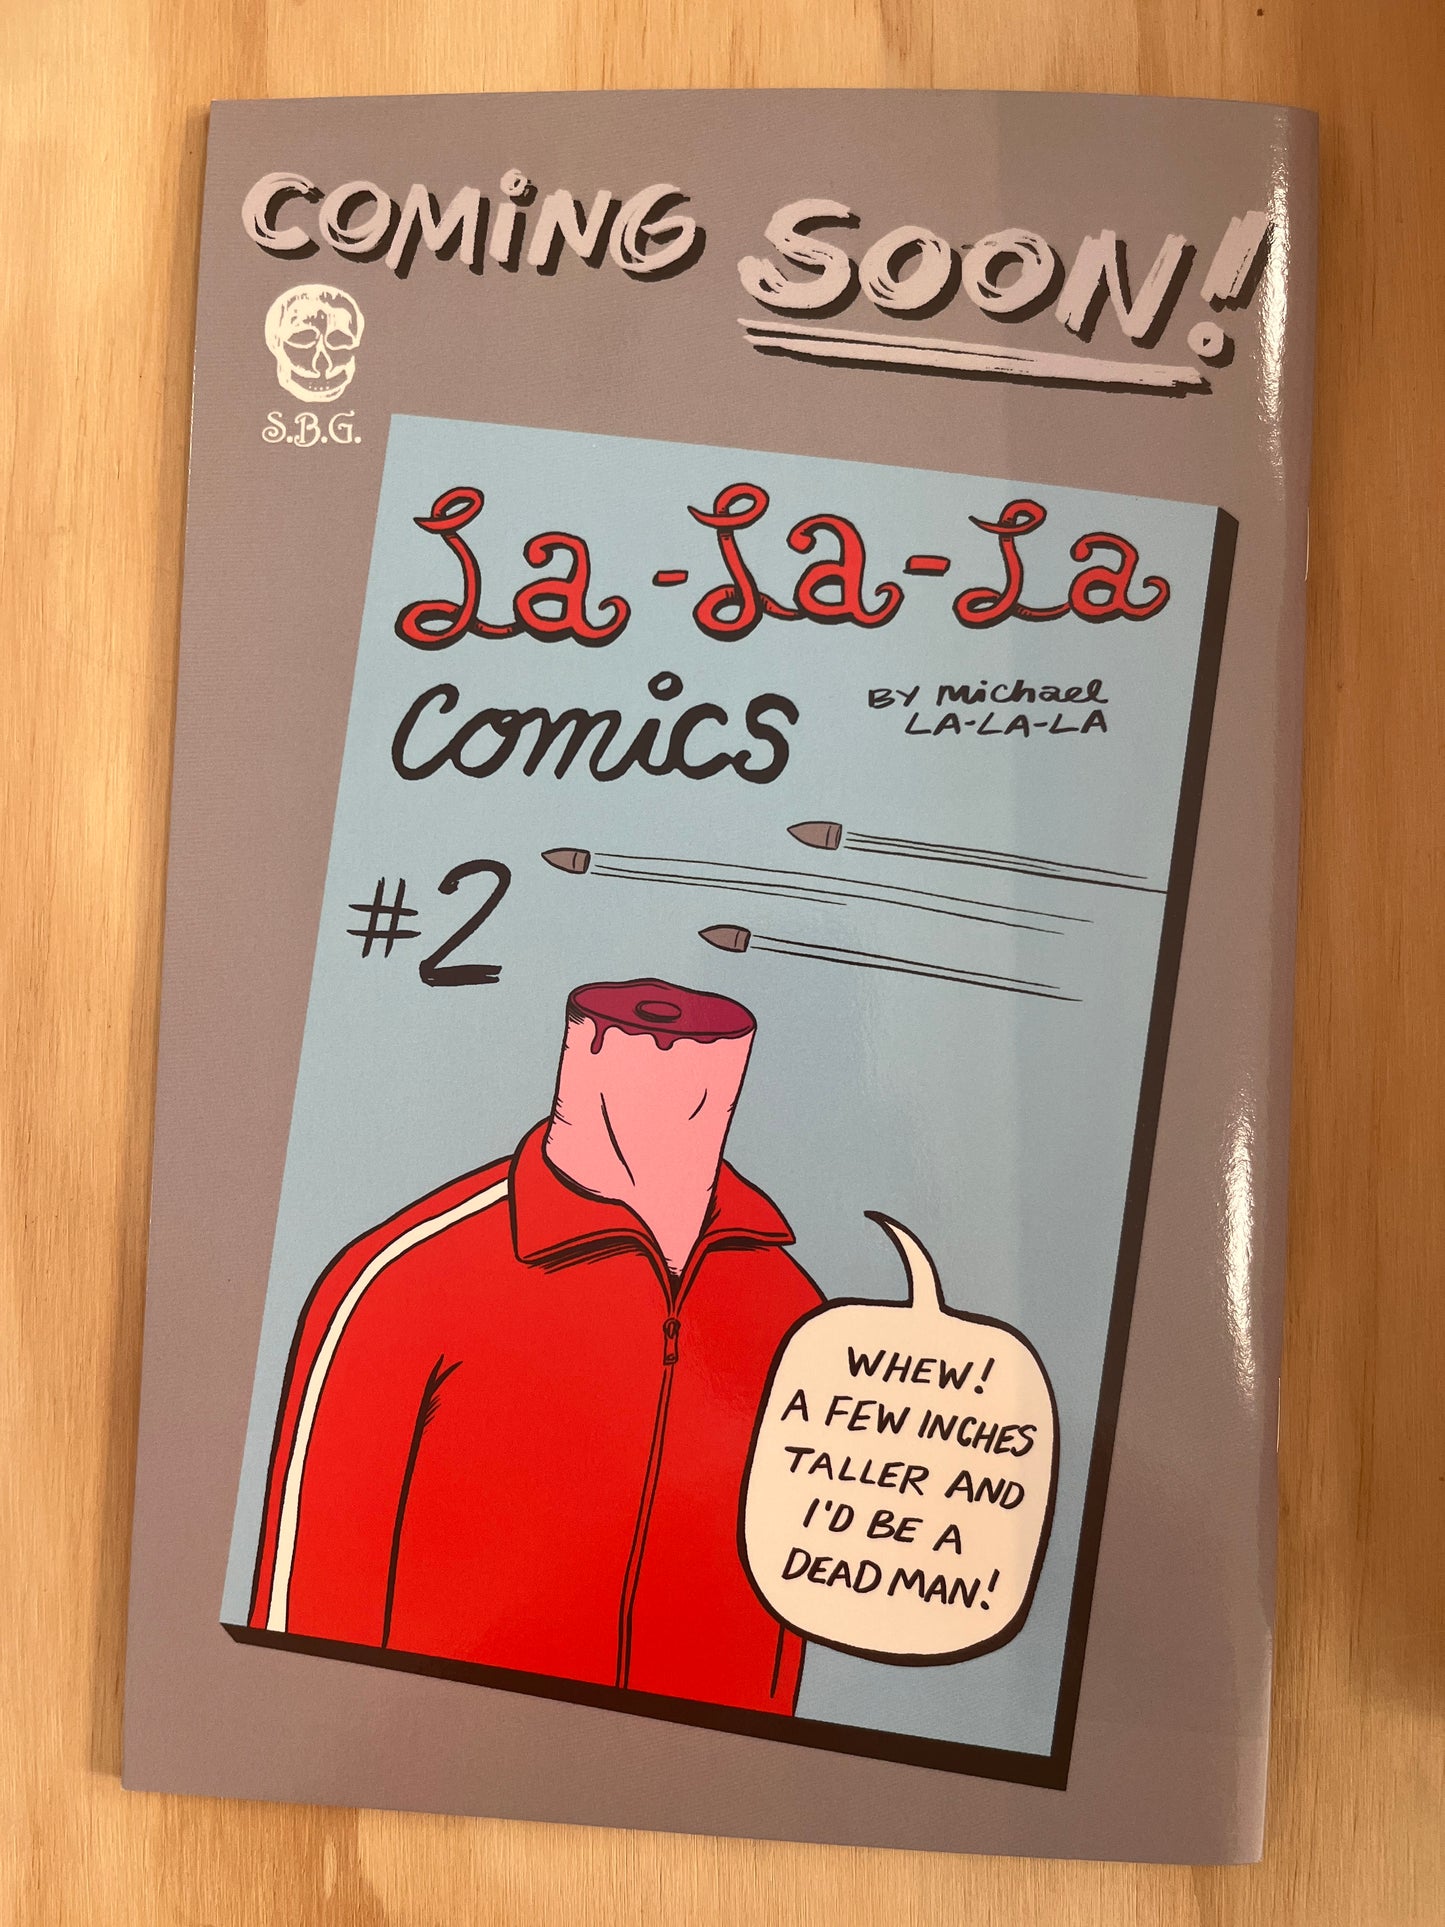 La-La-La Comics #1